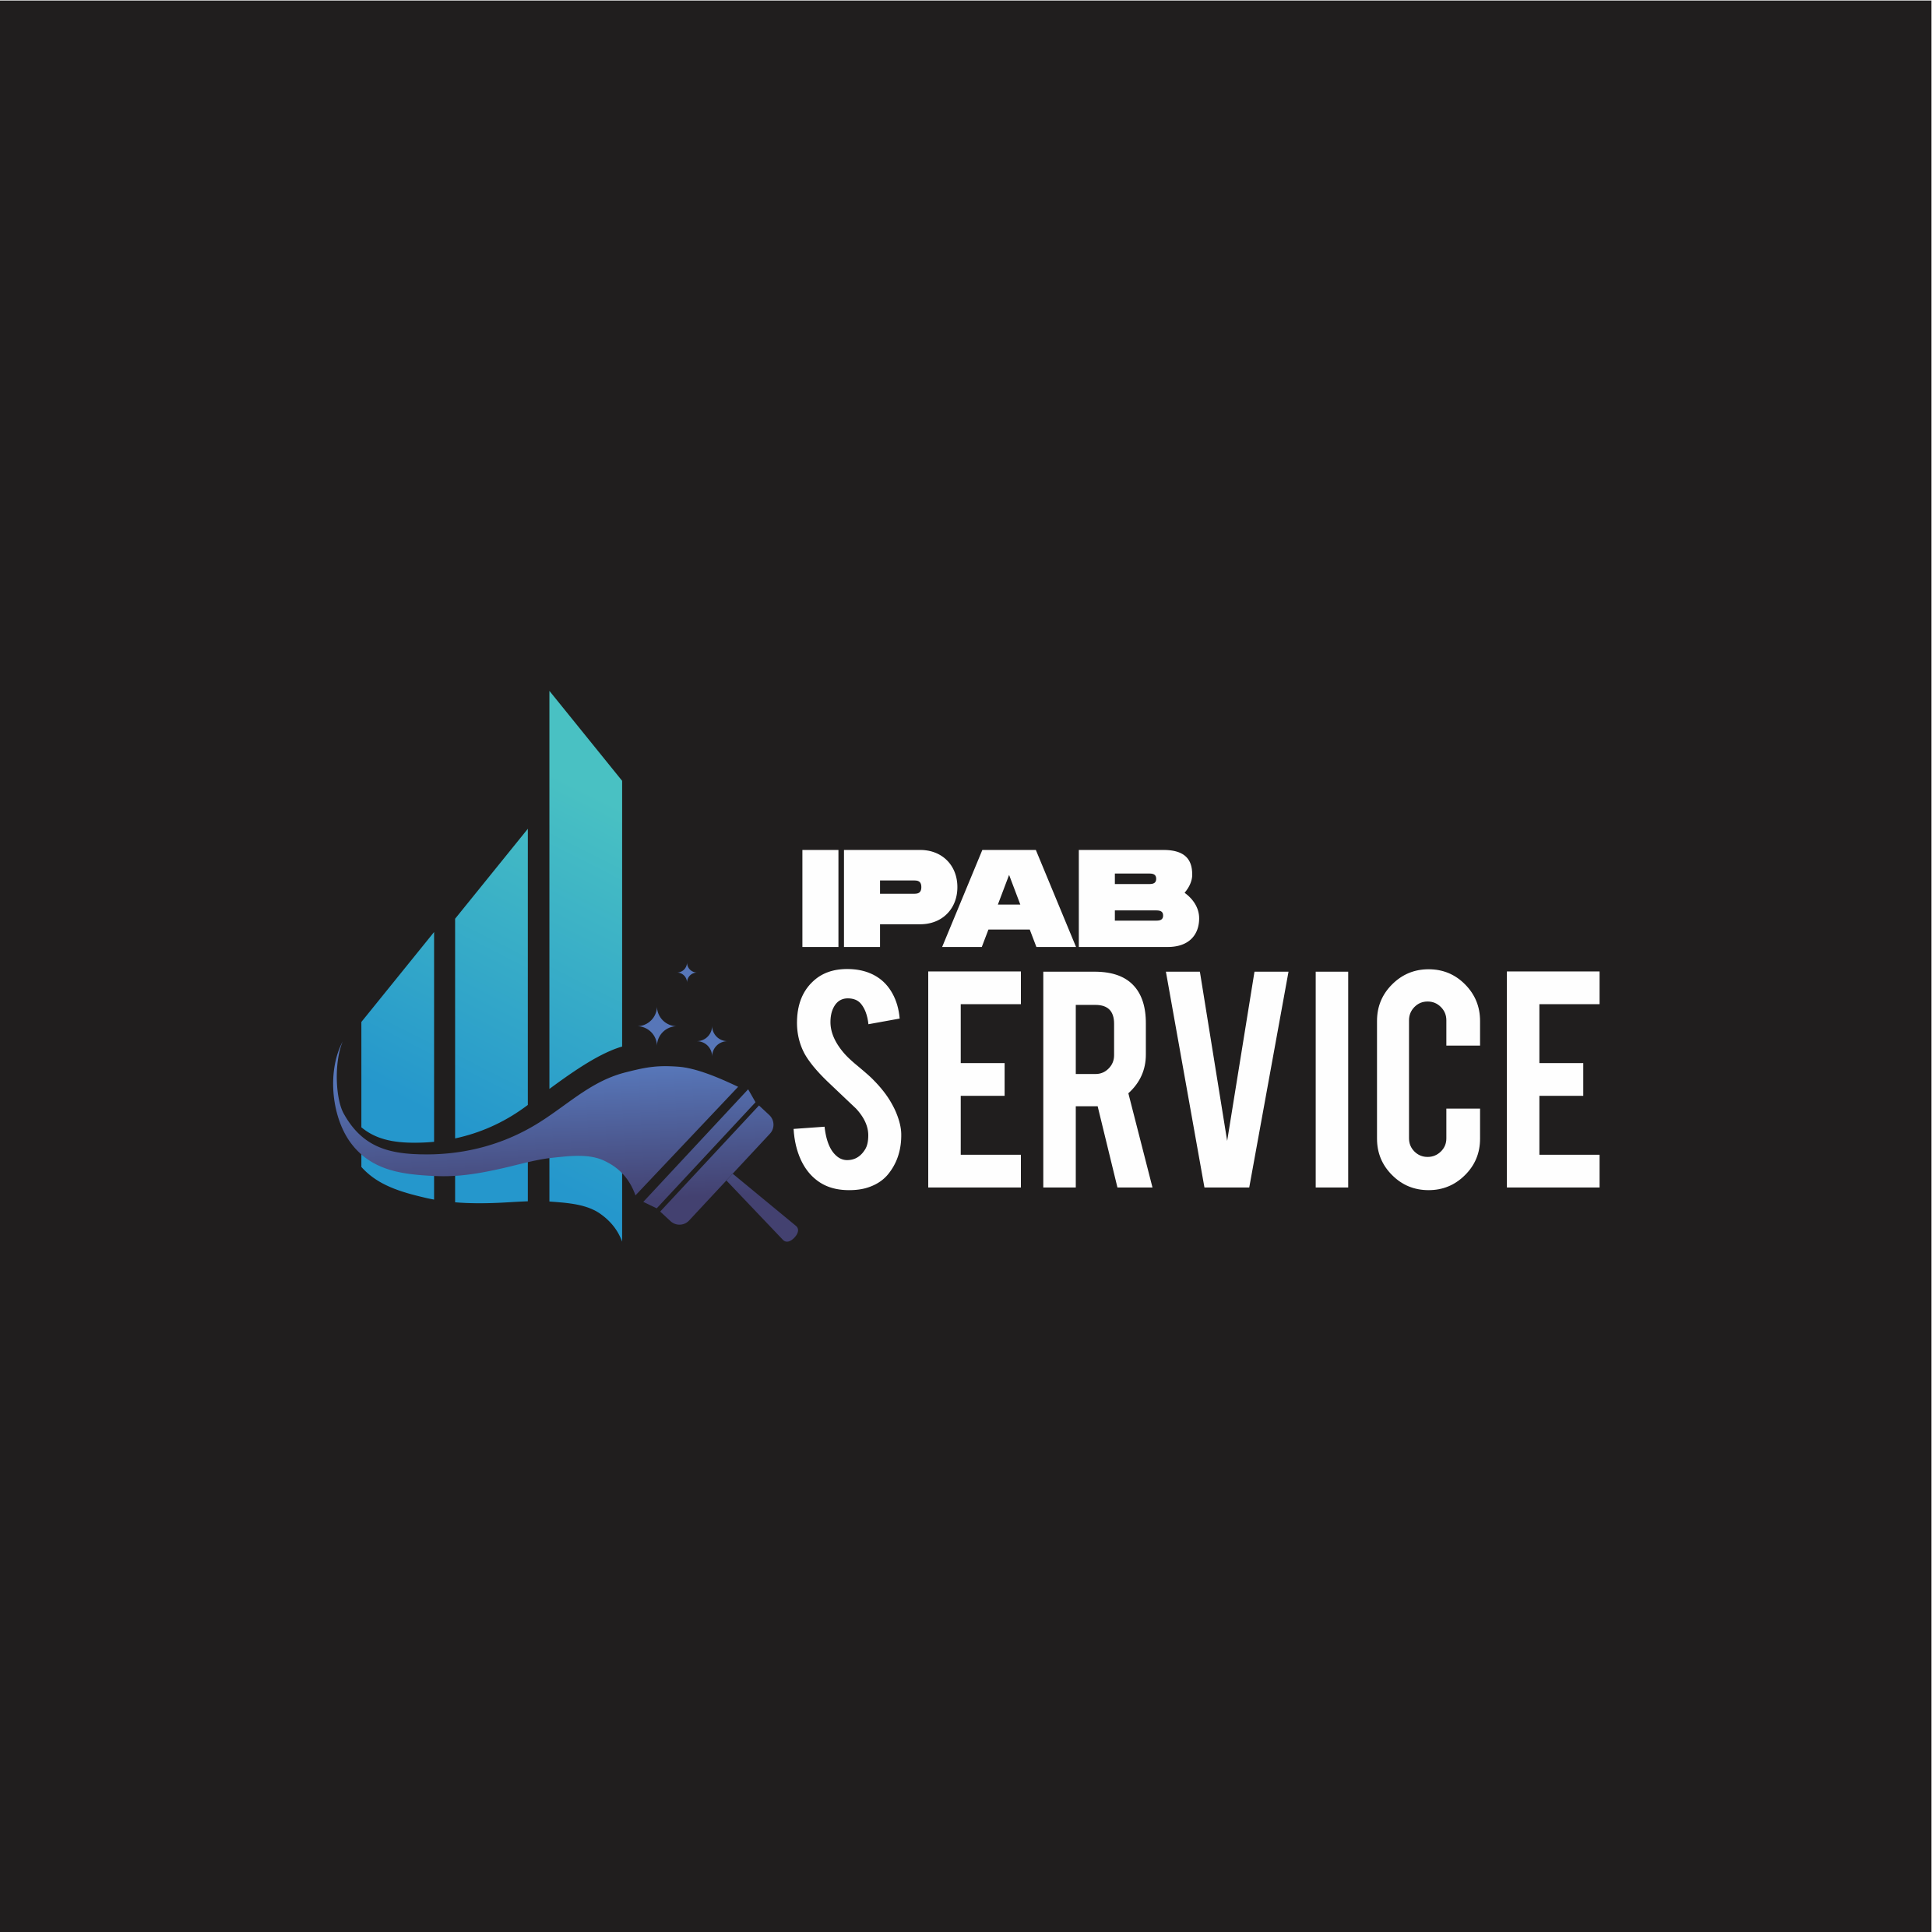 IPAB SERVICE